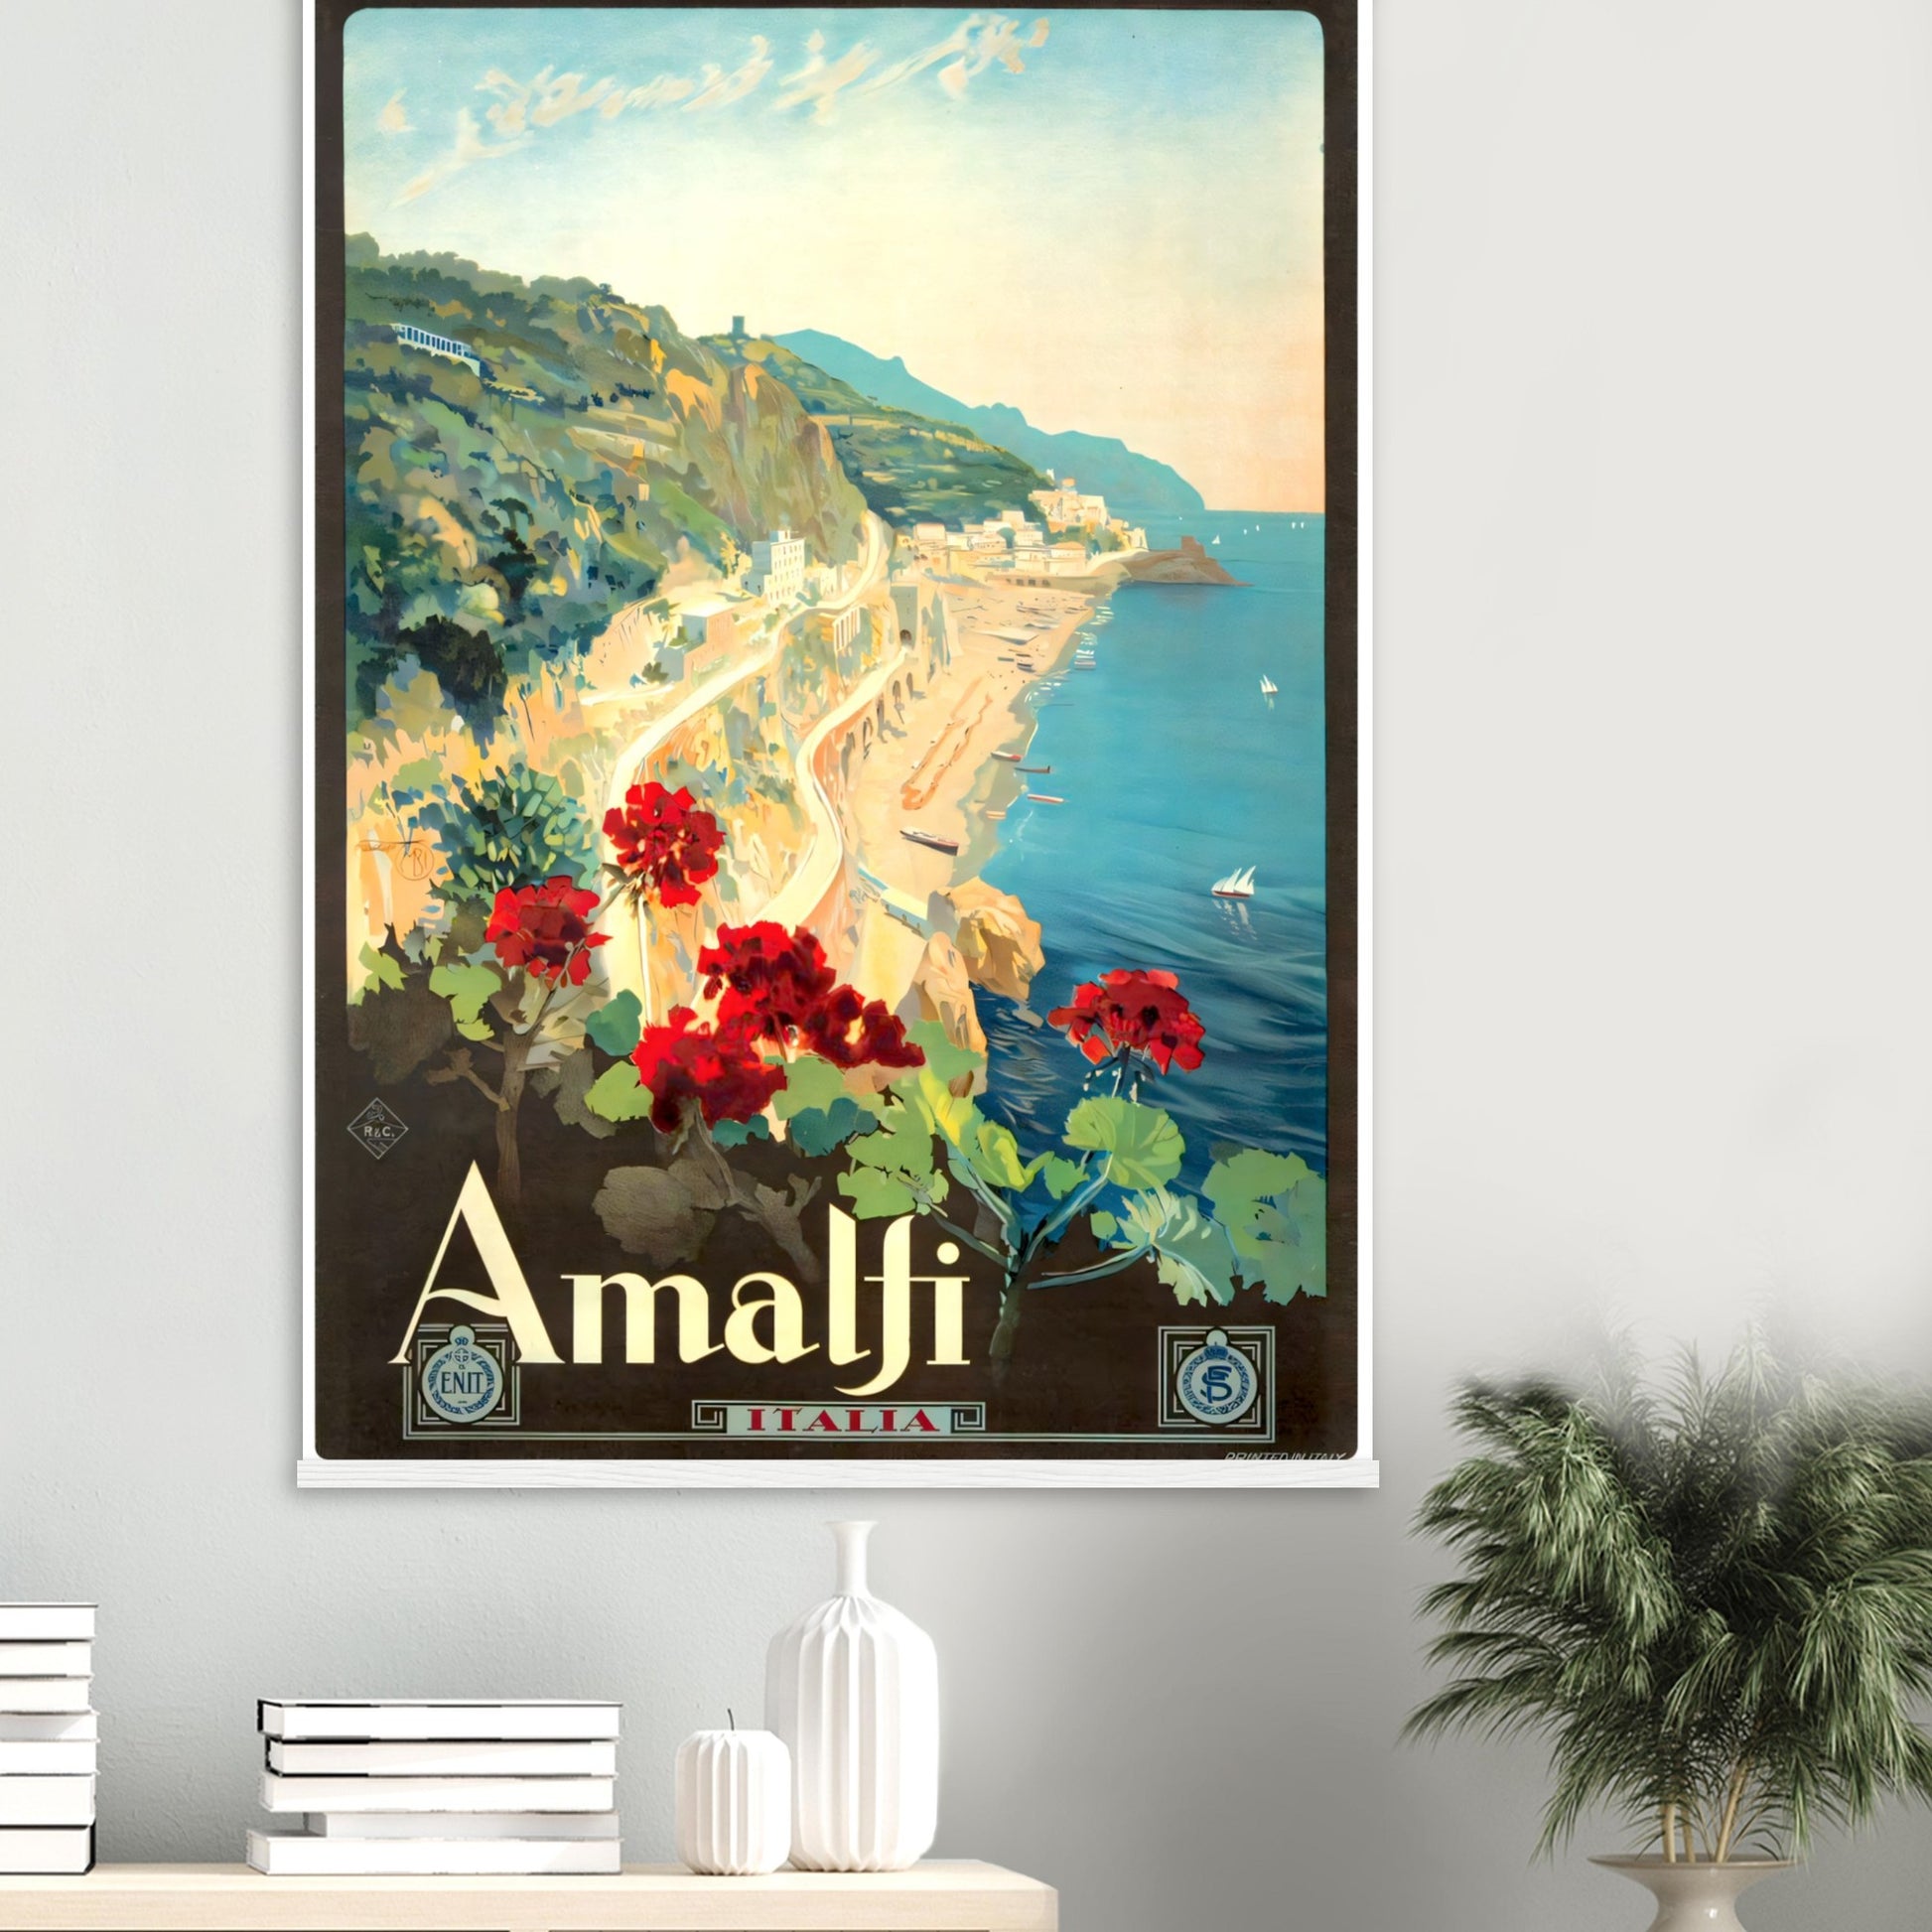 Amalfi Vintage Poster Reprint on premium Matte paper - Posterify